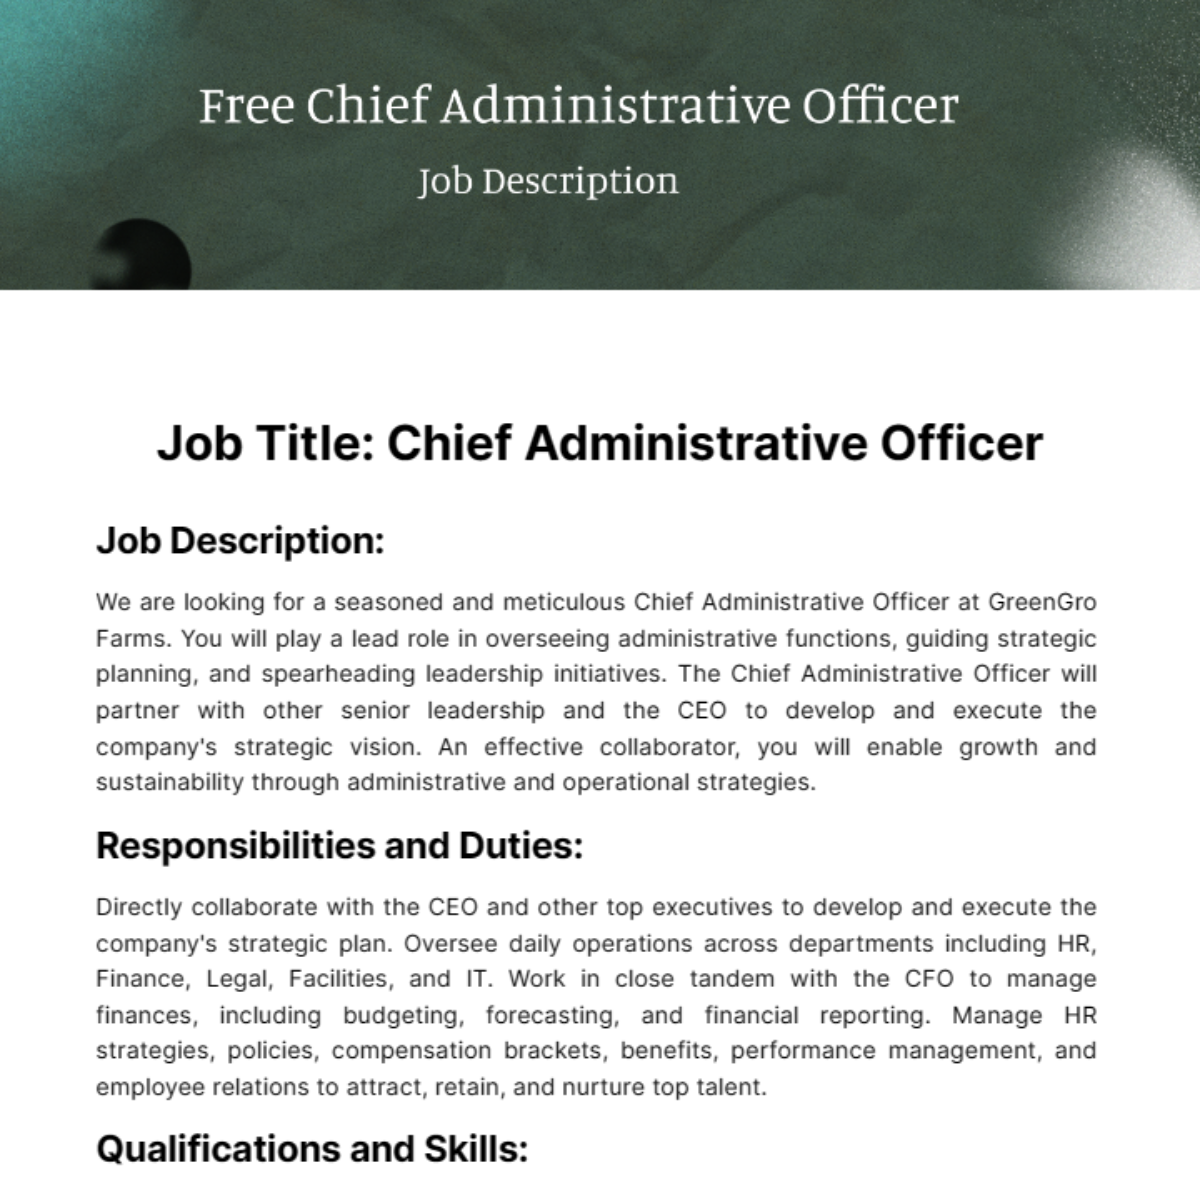 Chief Administrative Officer Job Description Template